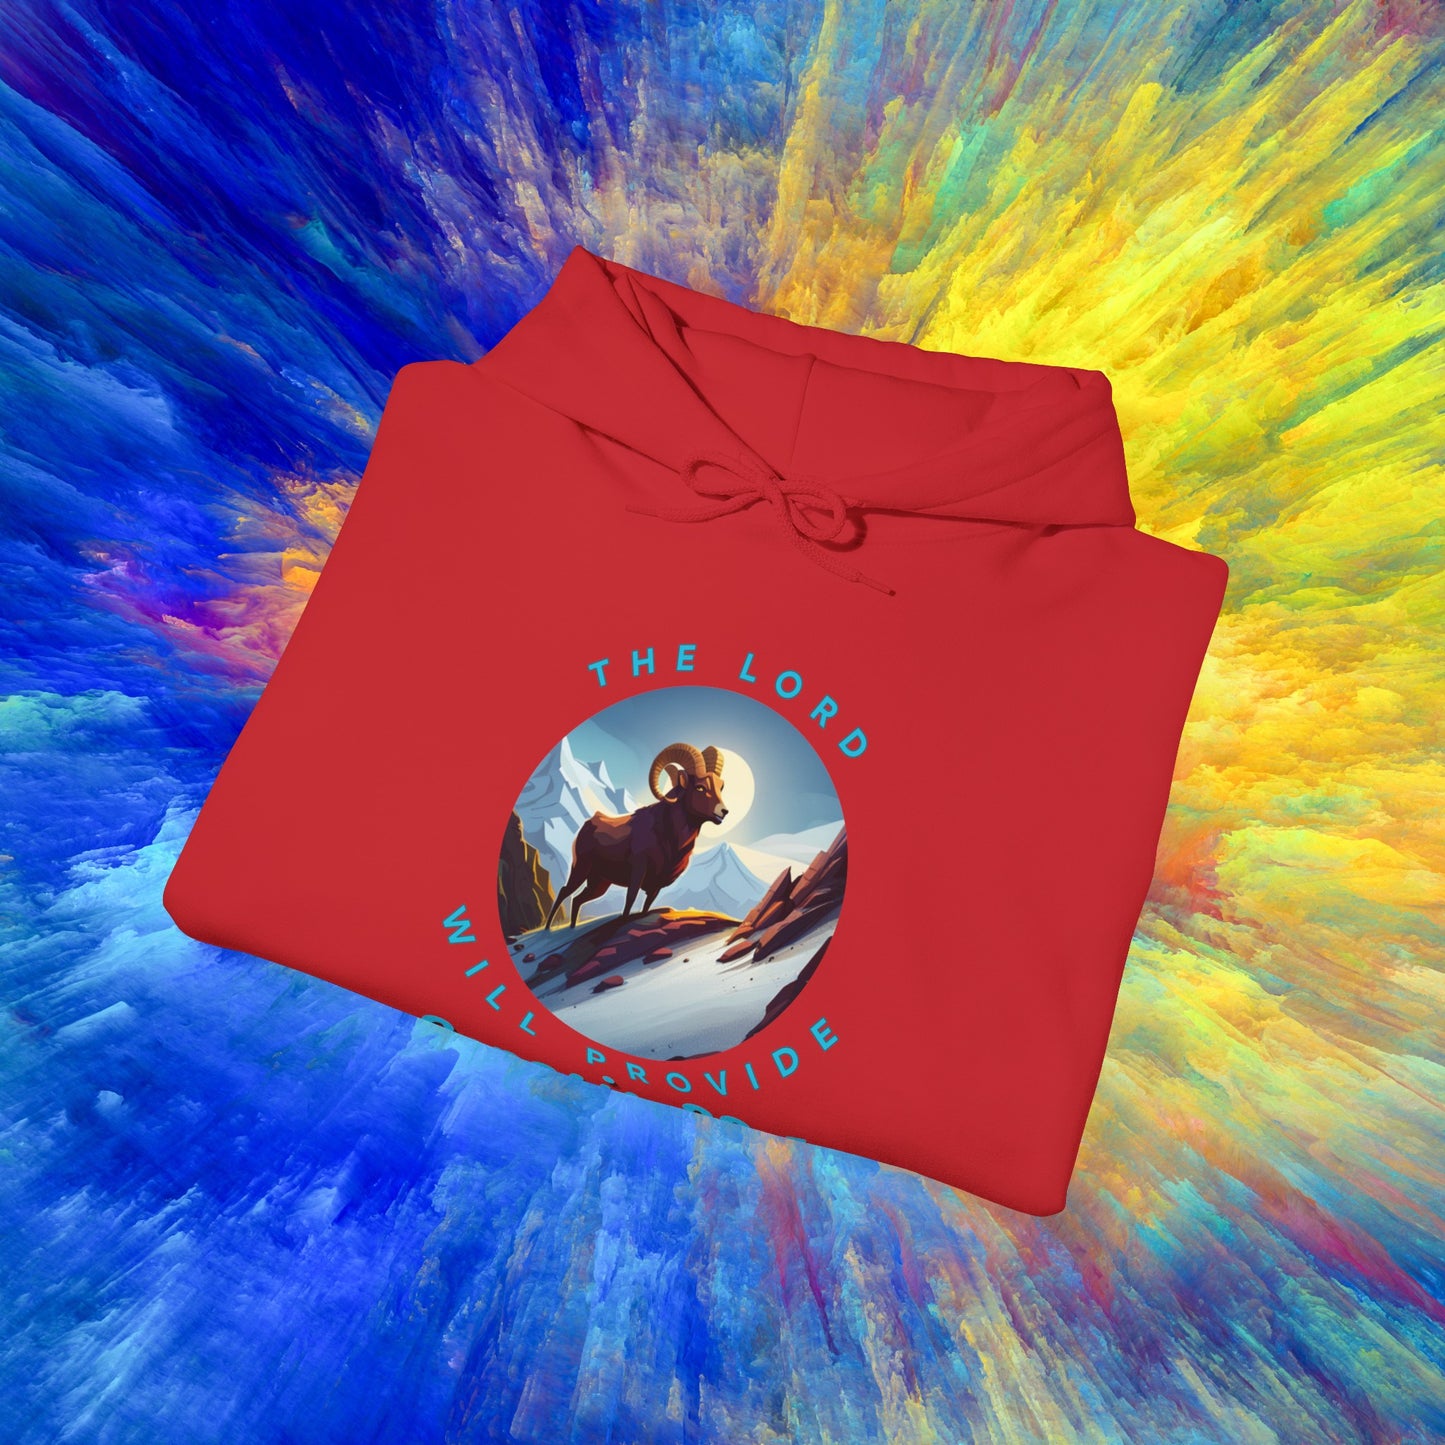 "Lord Provides" Collection: Genesis 22:14 Heavy Blend™ Hoodie Sweatshirt